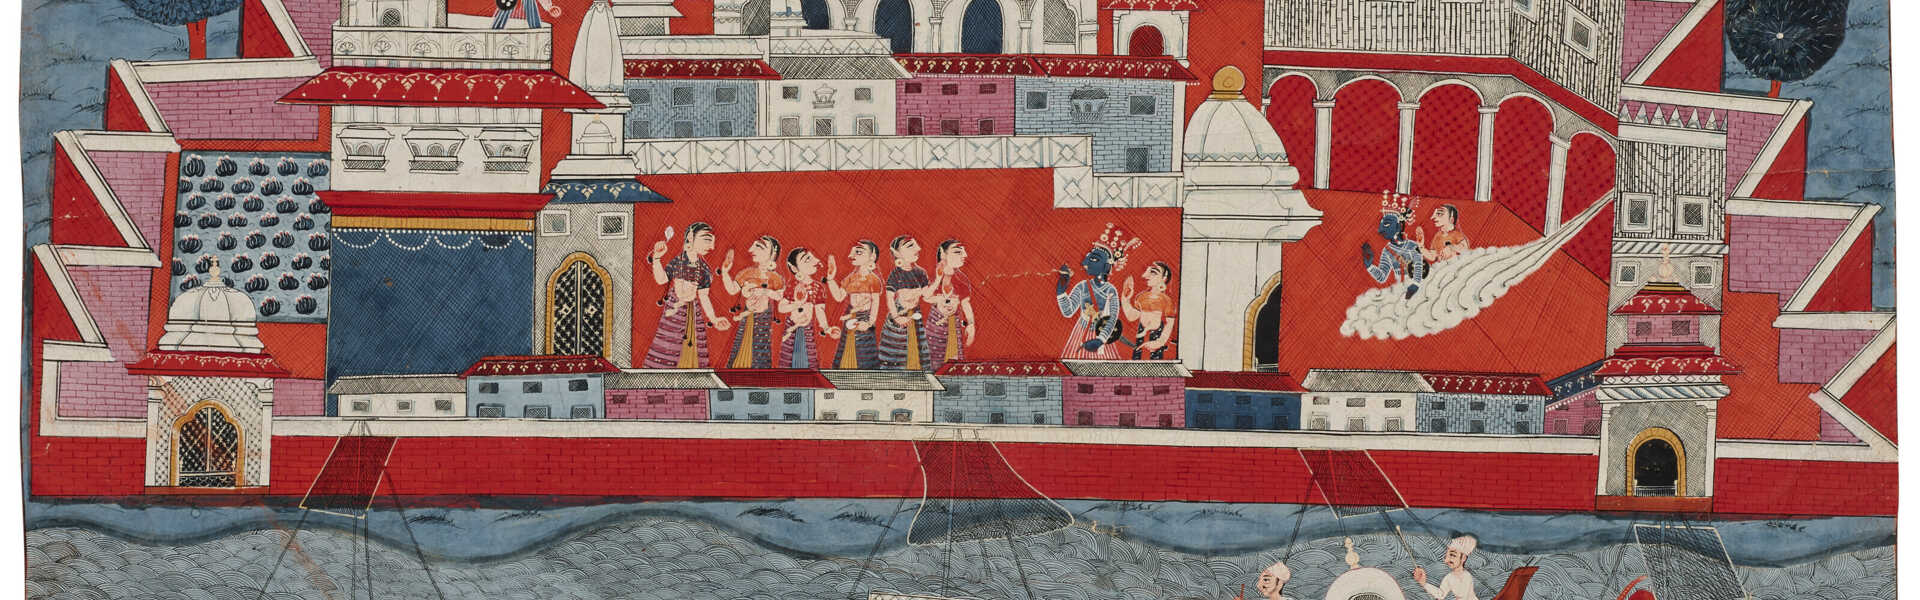 AN ILLUSTRATION FROM A BHAGAVATA PURANA SERIES: PRADYUMNA AND MAYAVATI ARRIVE AT DWARKA